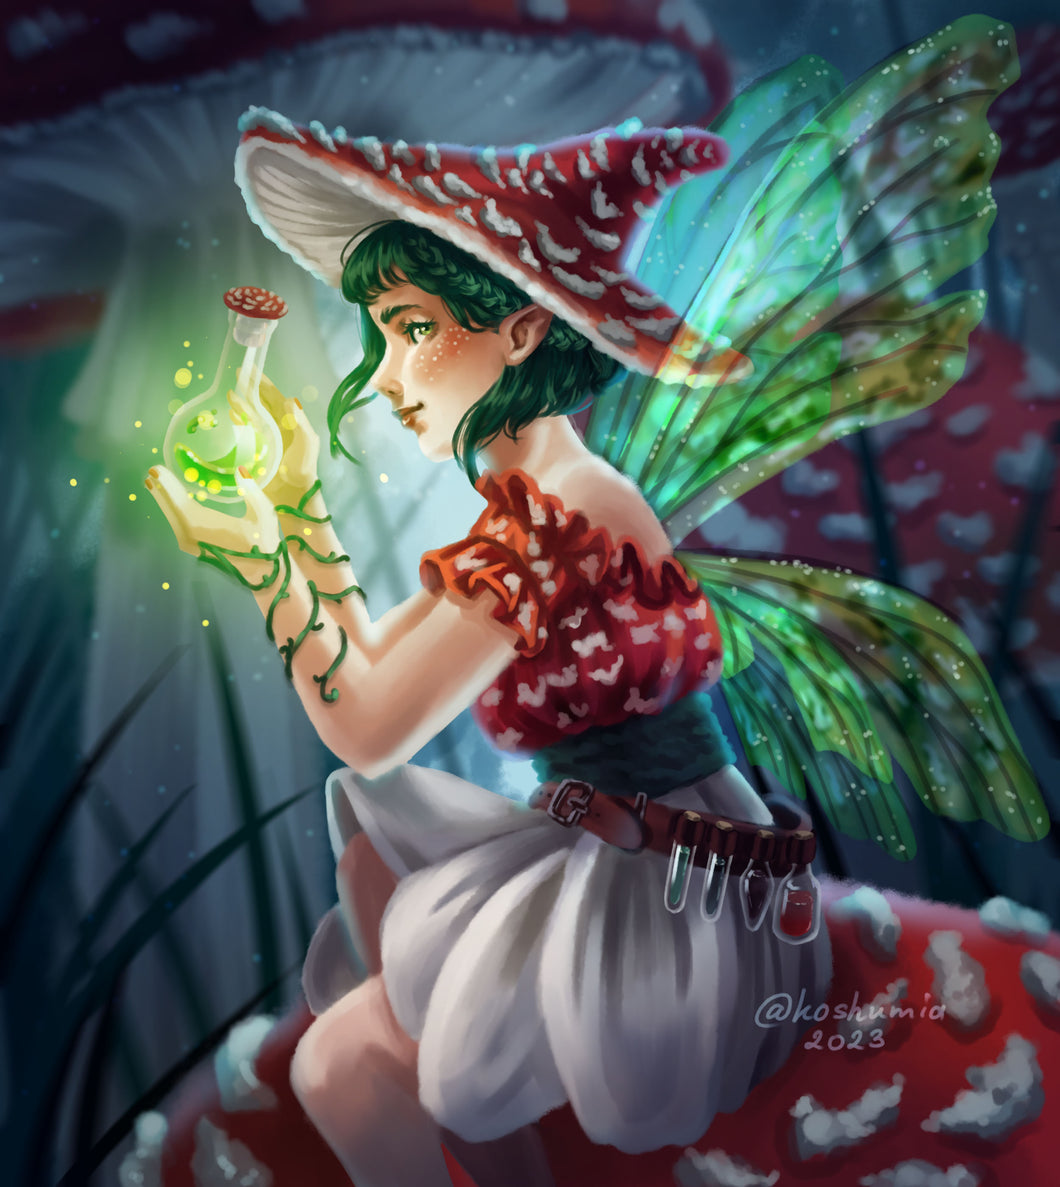 *PREORDER* The Amanita Fairy by Koshumia